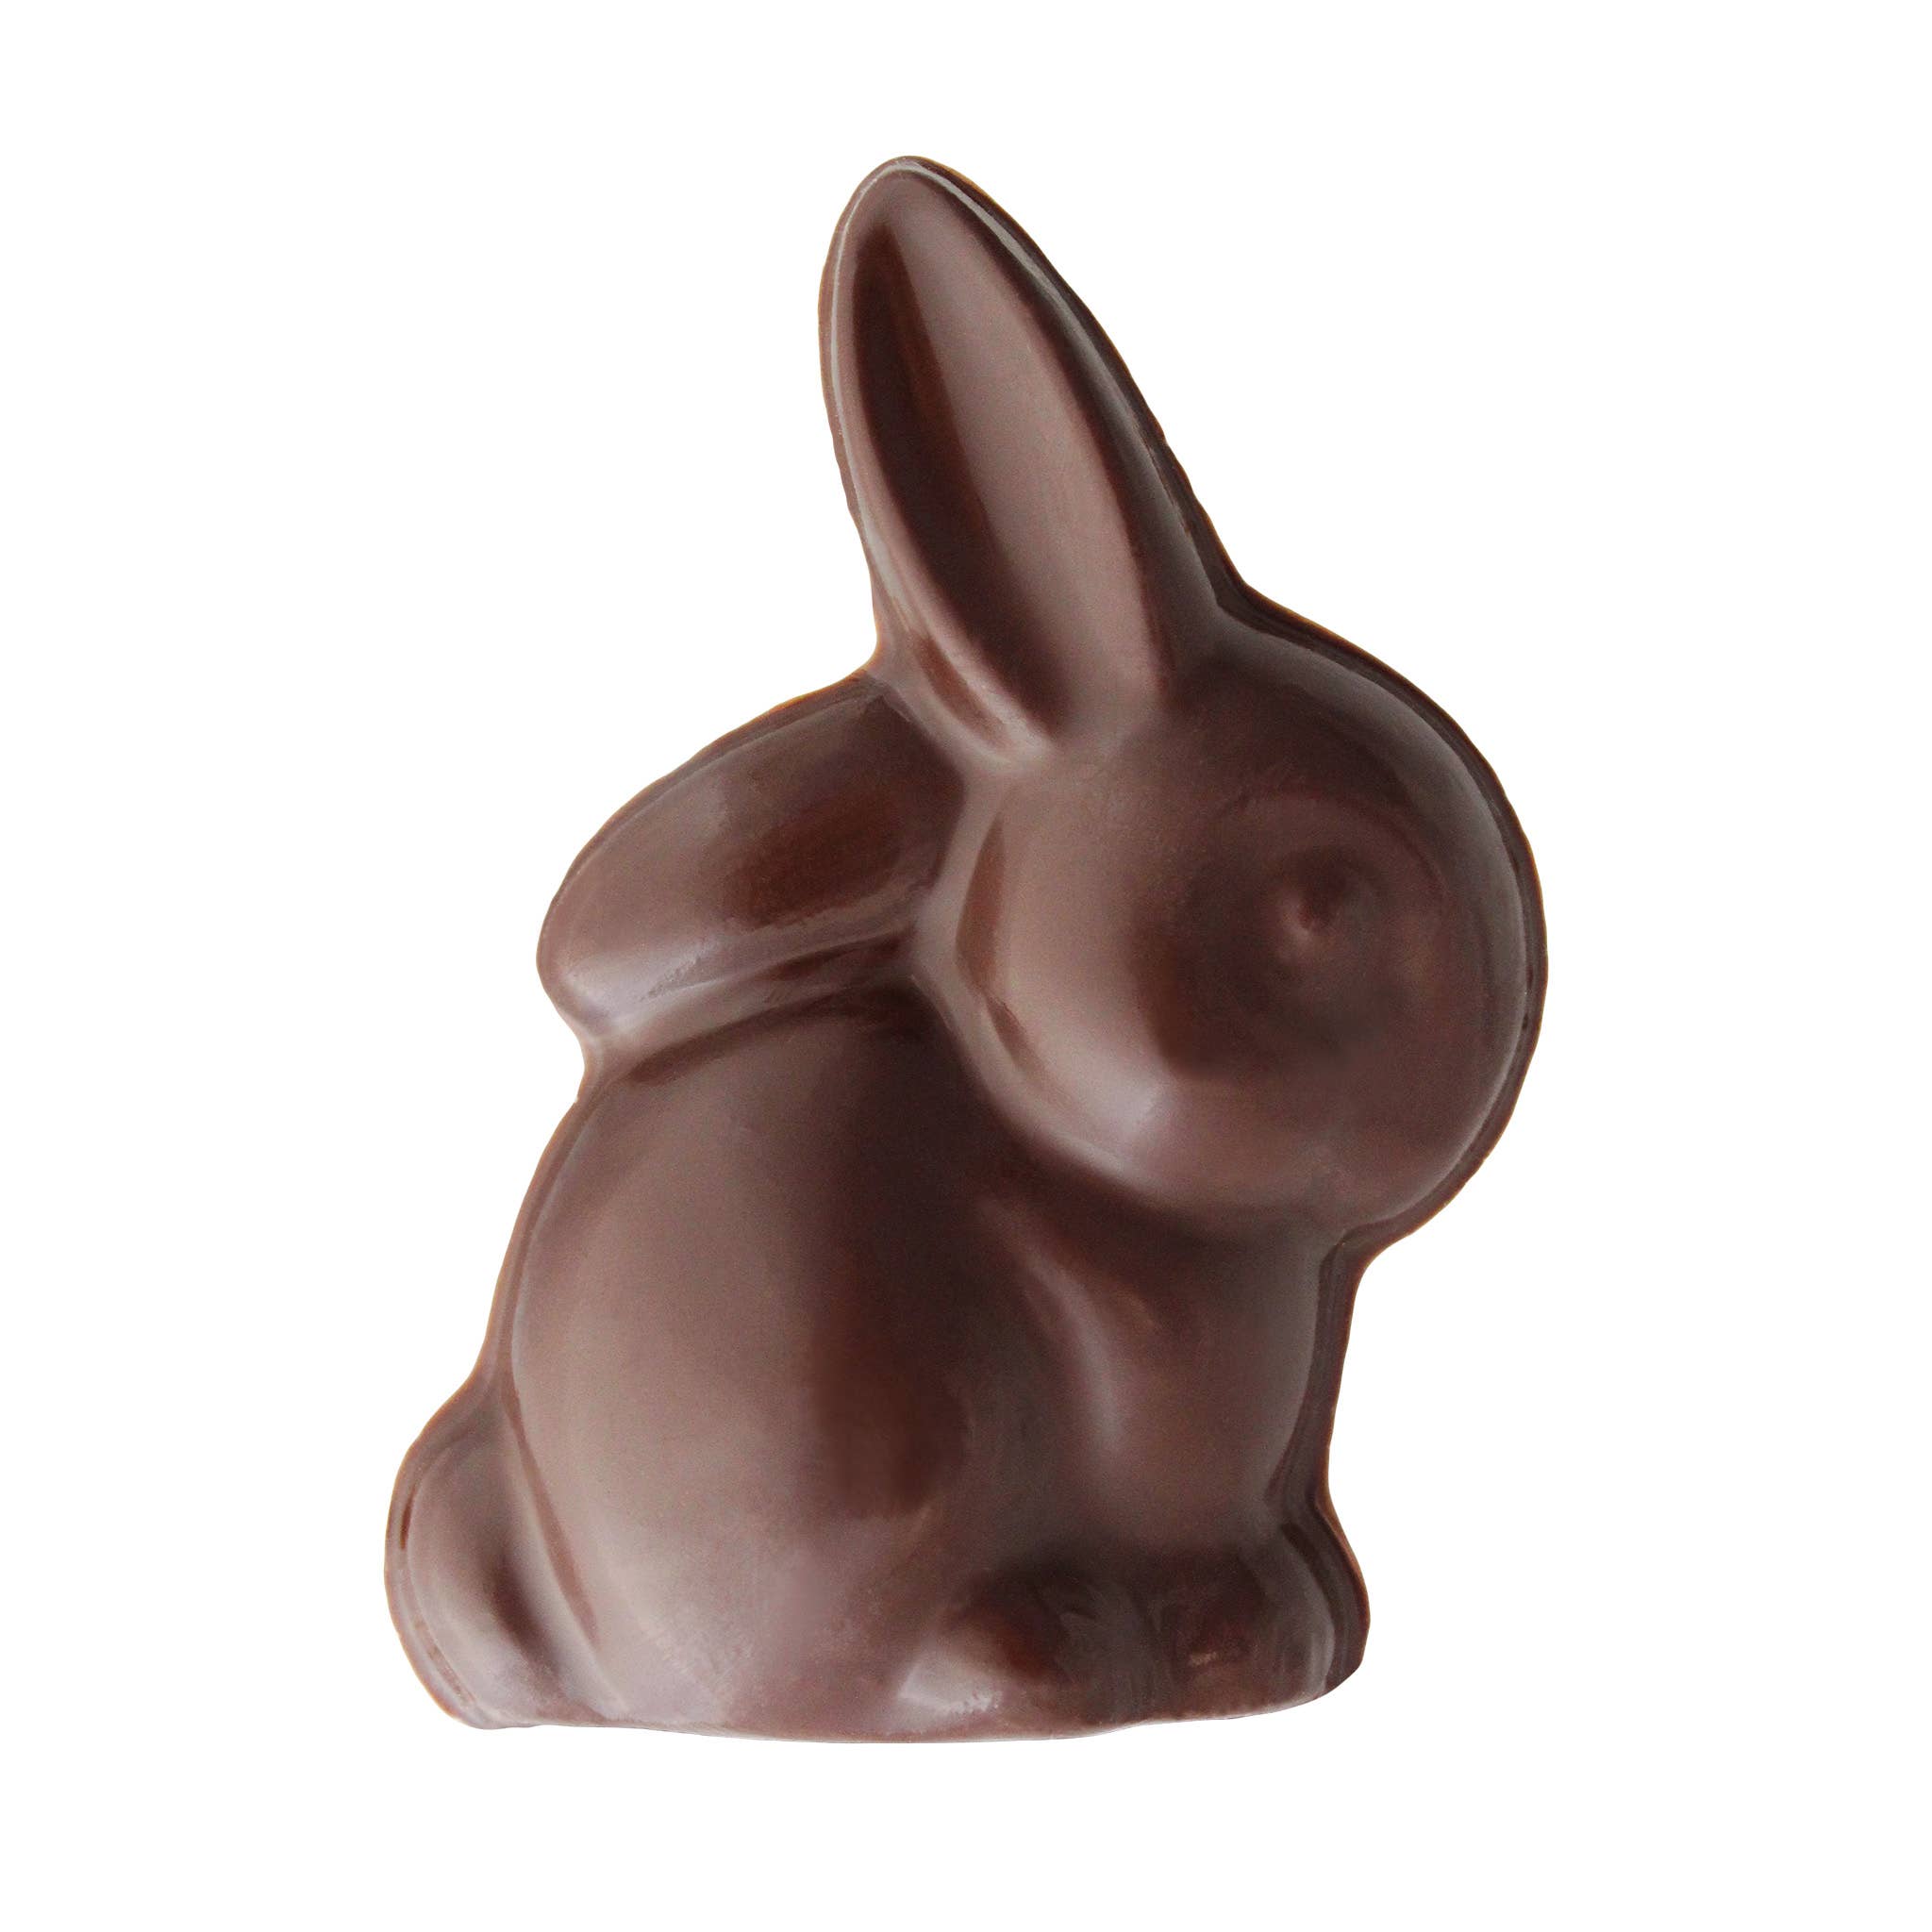 Vermont Nut Free Chocolates - Chocolate Baby Bunny